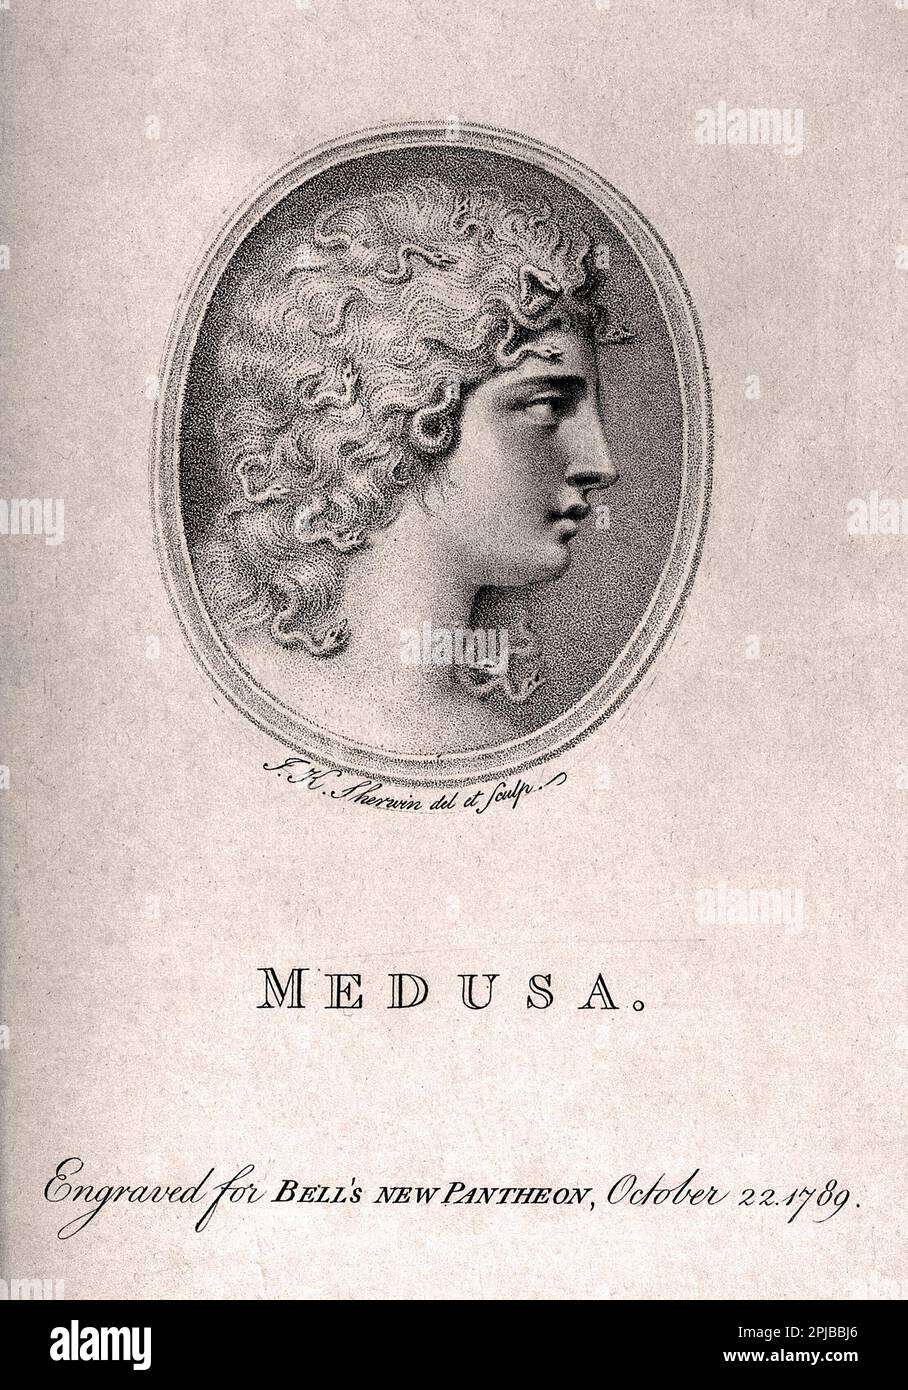 Medusa, vintage stipple engraving by J.K. Sherwin from 1789 Stock Photo